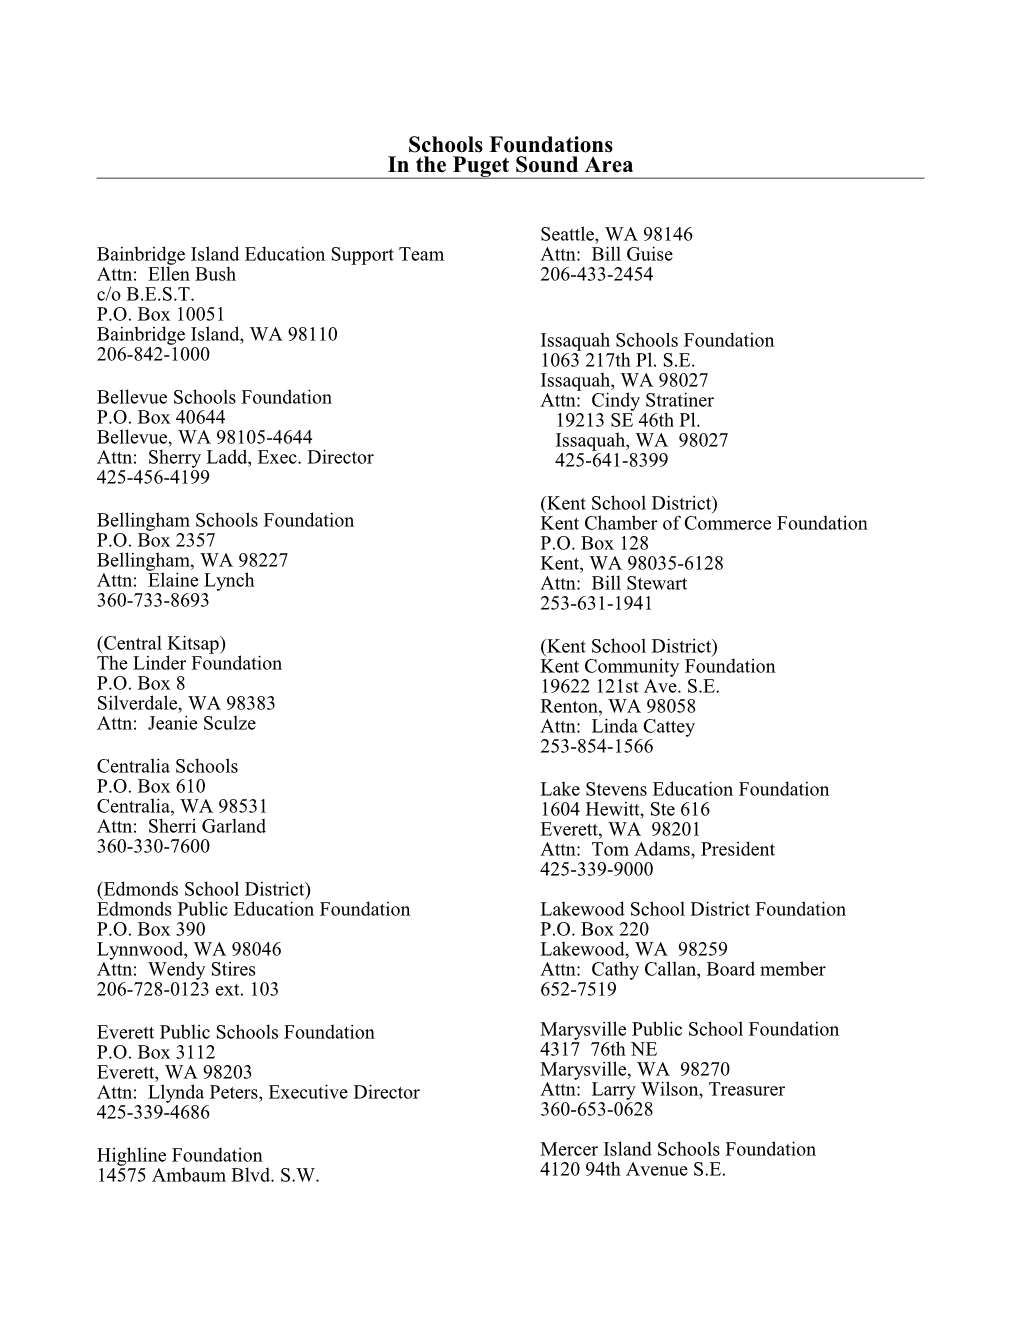 List of Schools Foundations